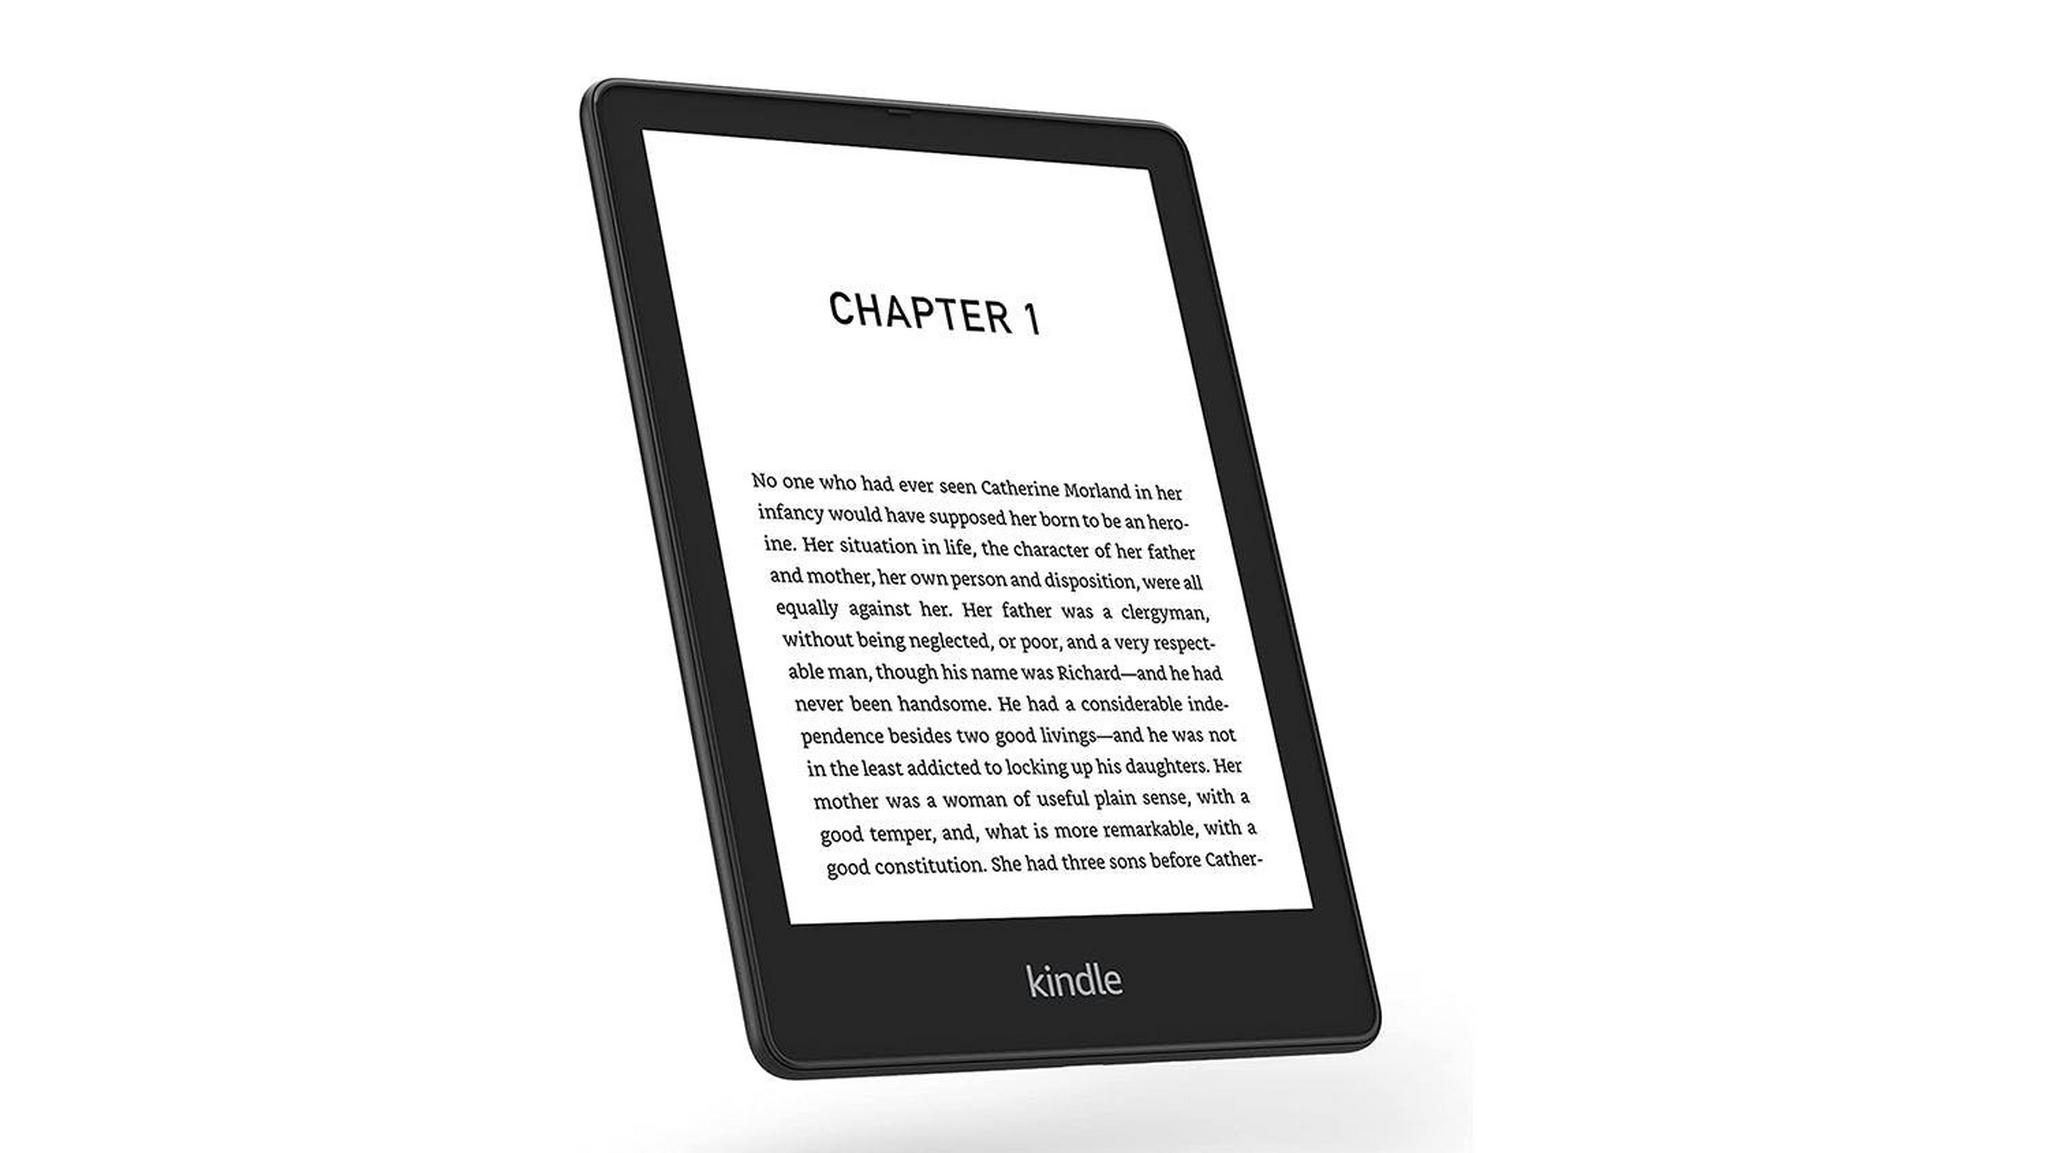 Amazon Kindle PaperWhite 32GB 6 inch E-Reader Wifi Tab - Black